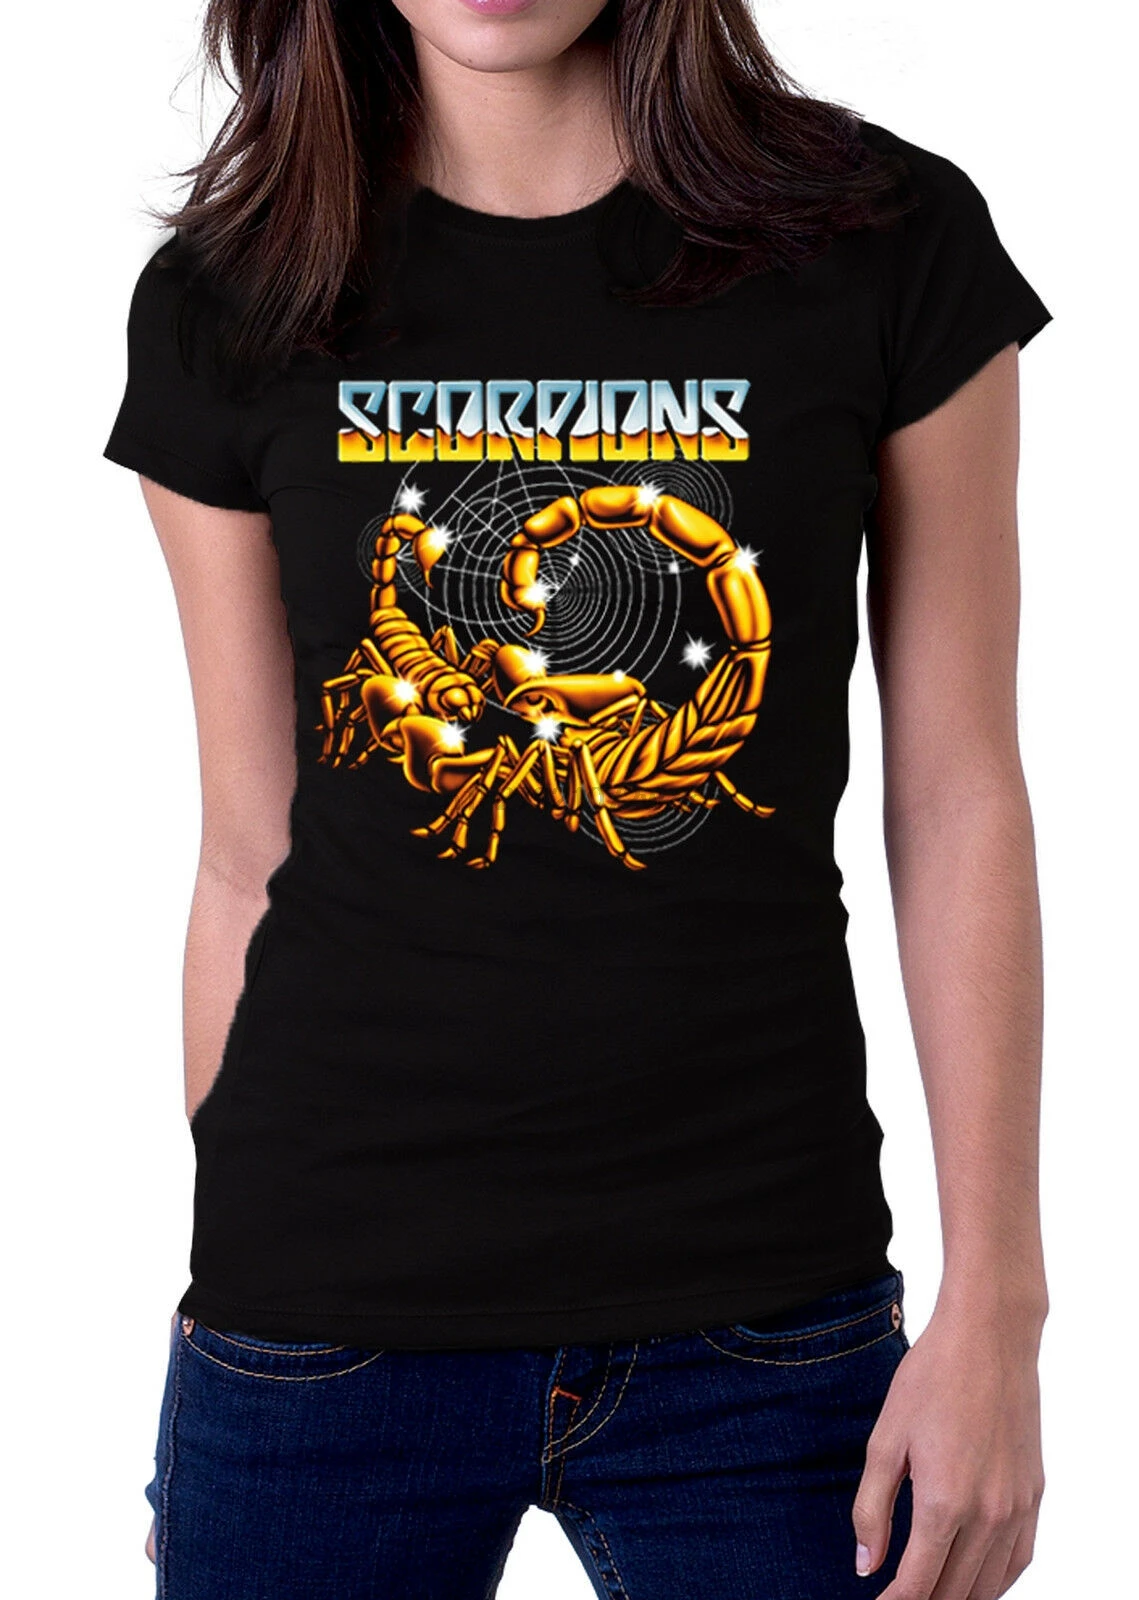 Scorpions Rock Heavy Metal Band Red Logo Women's T-Shirt S M L XL XXL